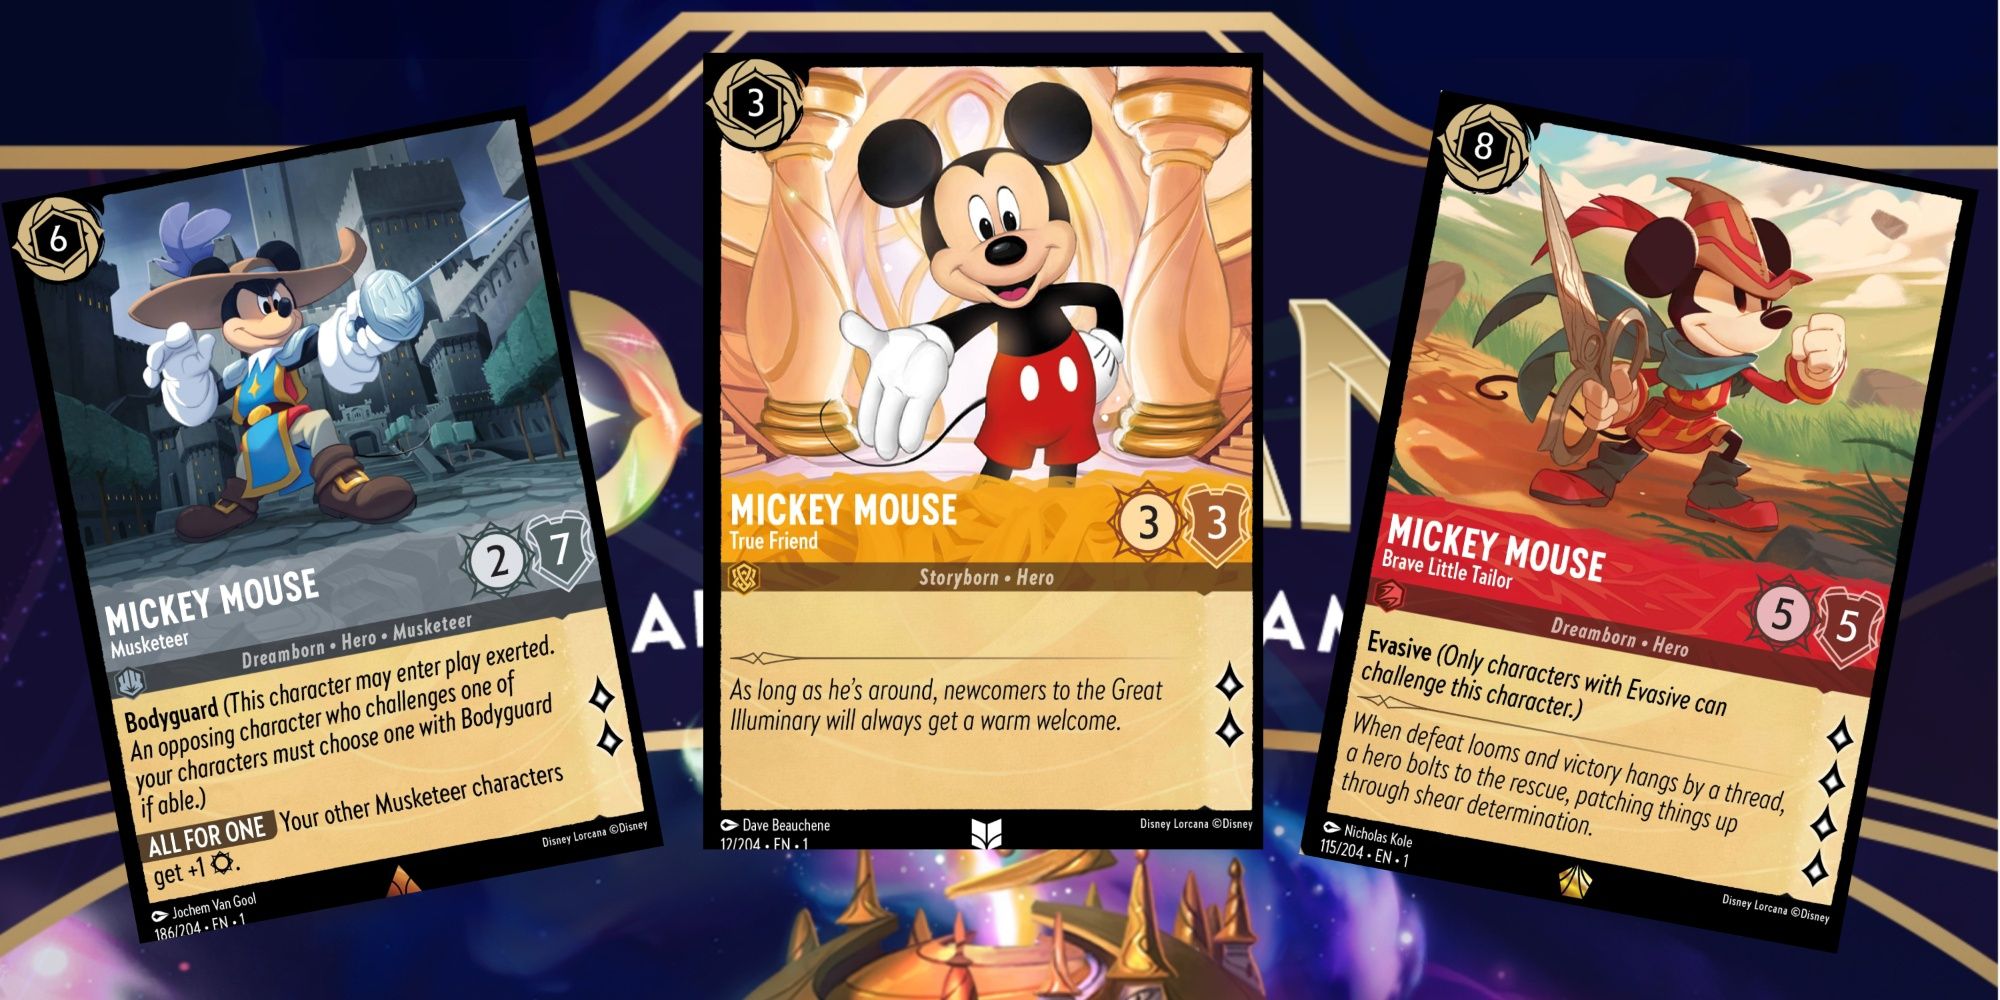 Shakespeare Disney Mickey Beginner Kit